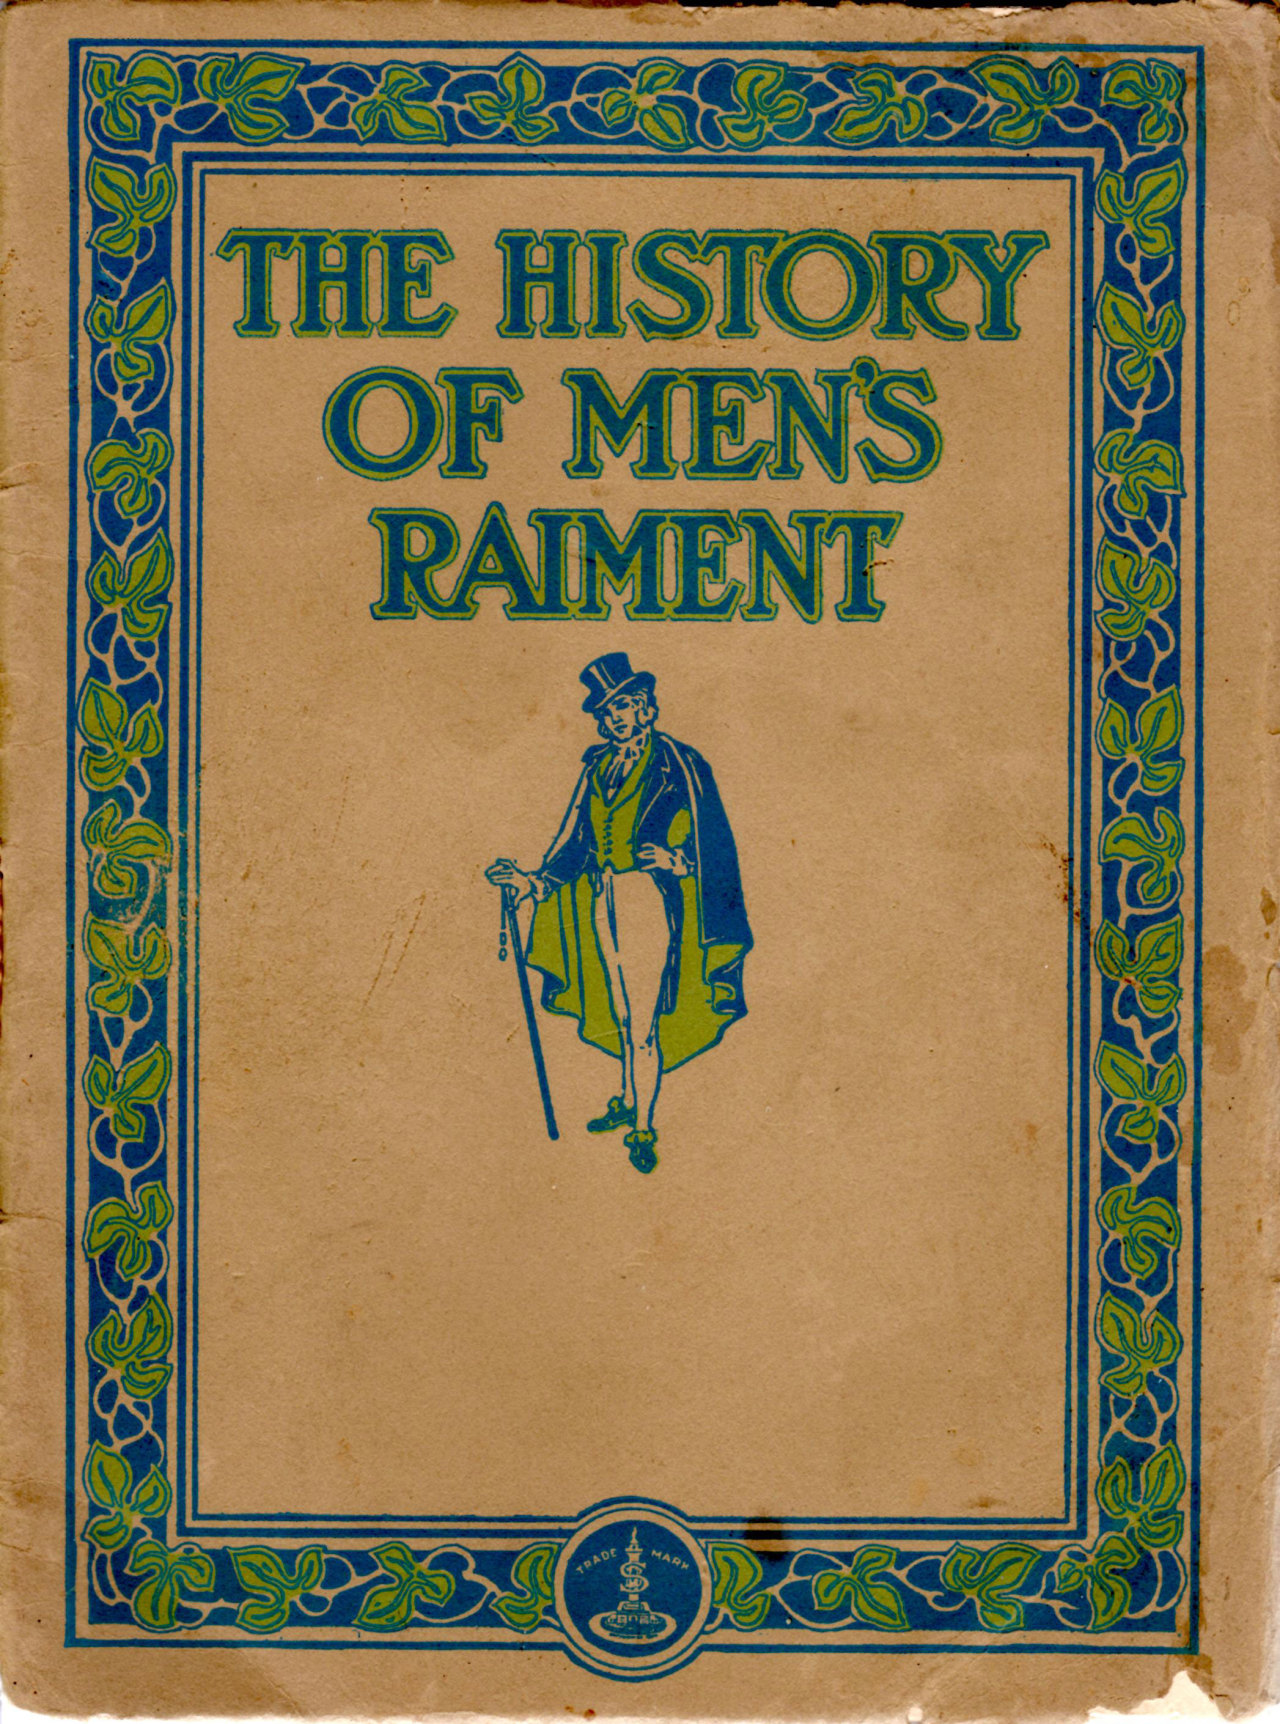 The History of Men’s Raiment: 18th & 19th Centuries